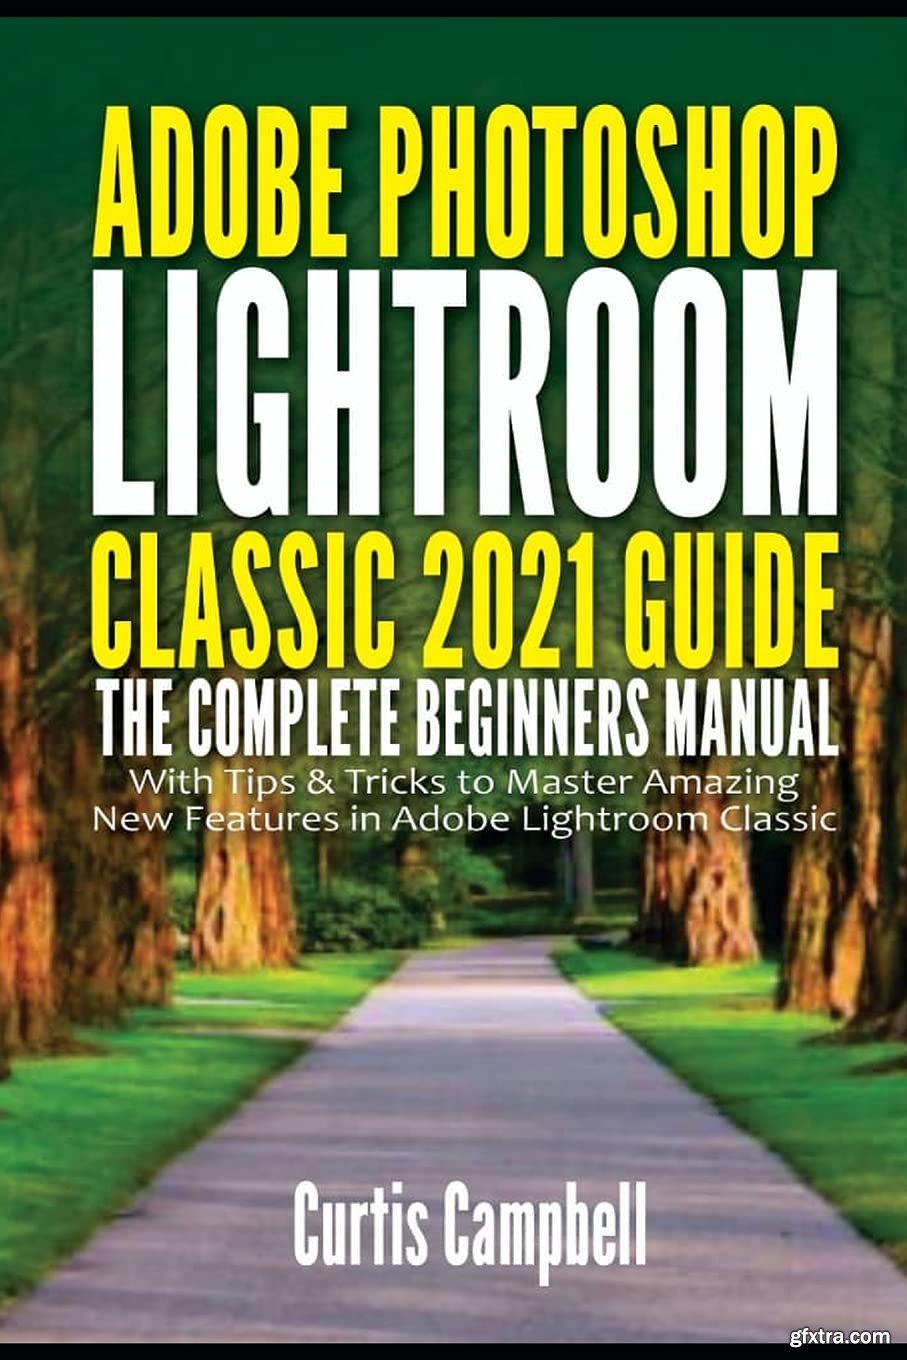 lightroom classic latest version 2021